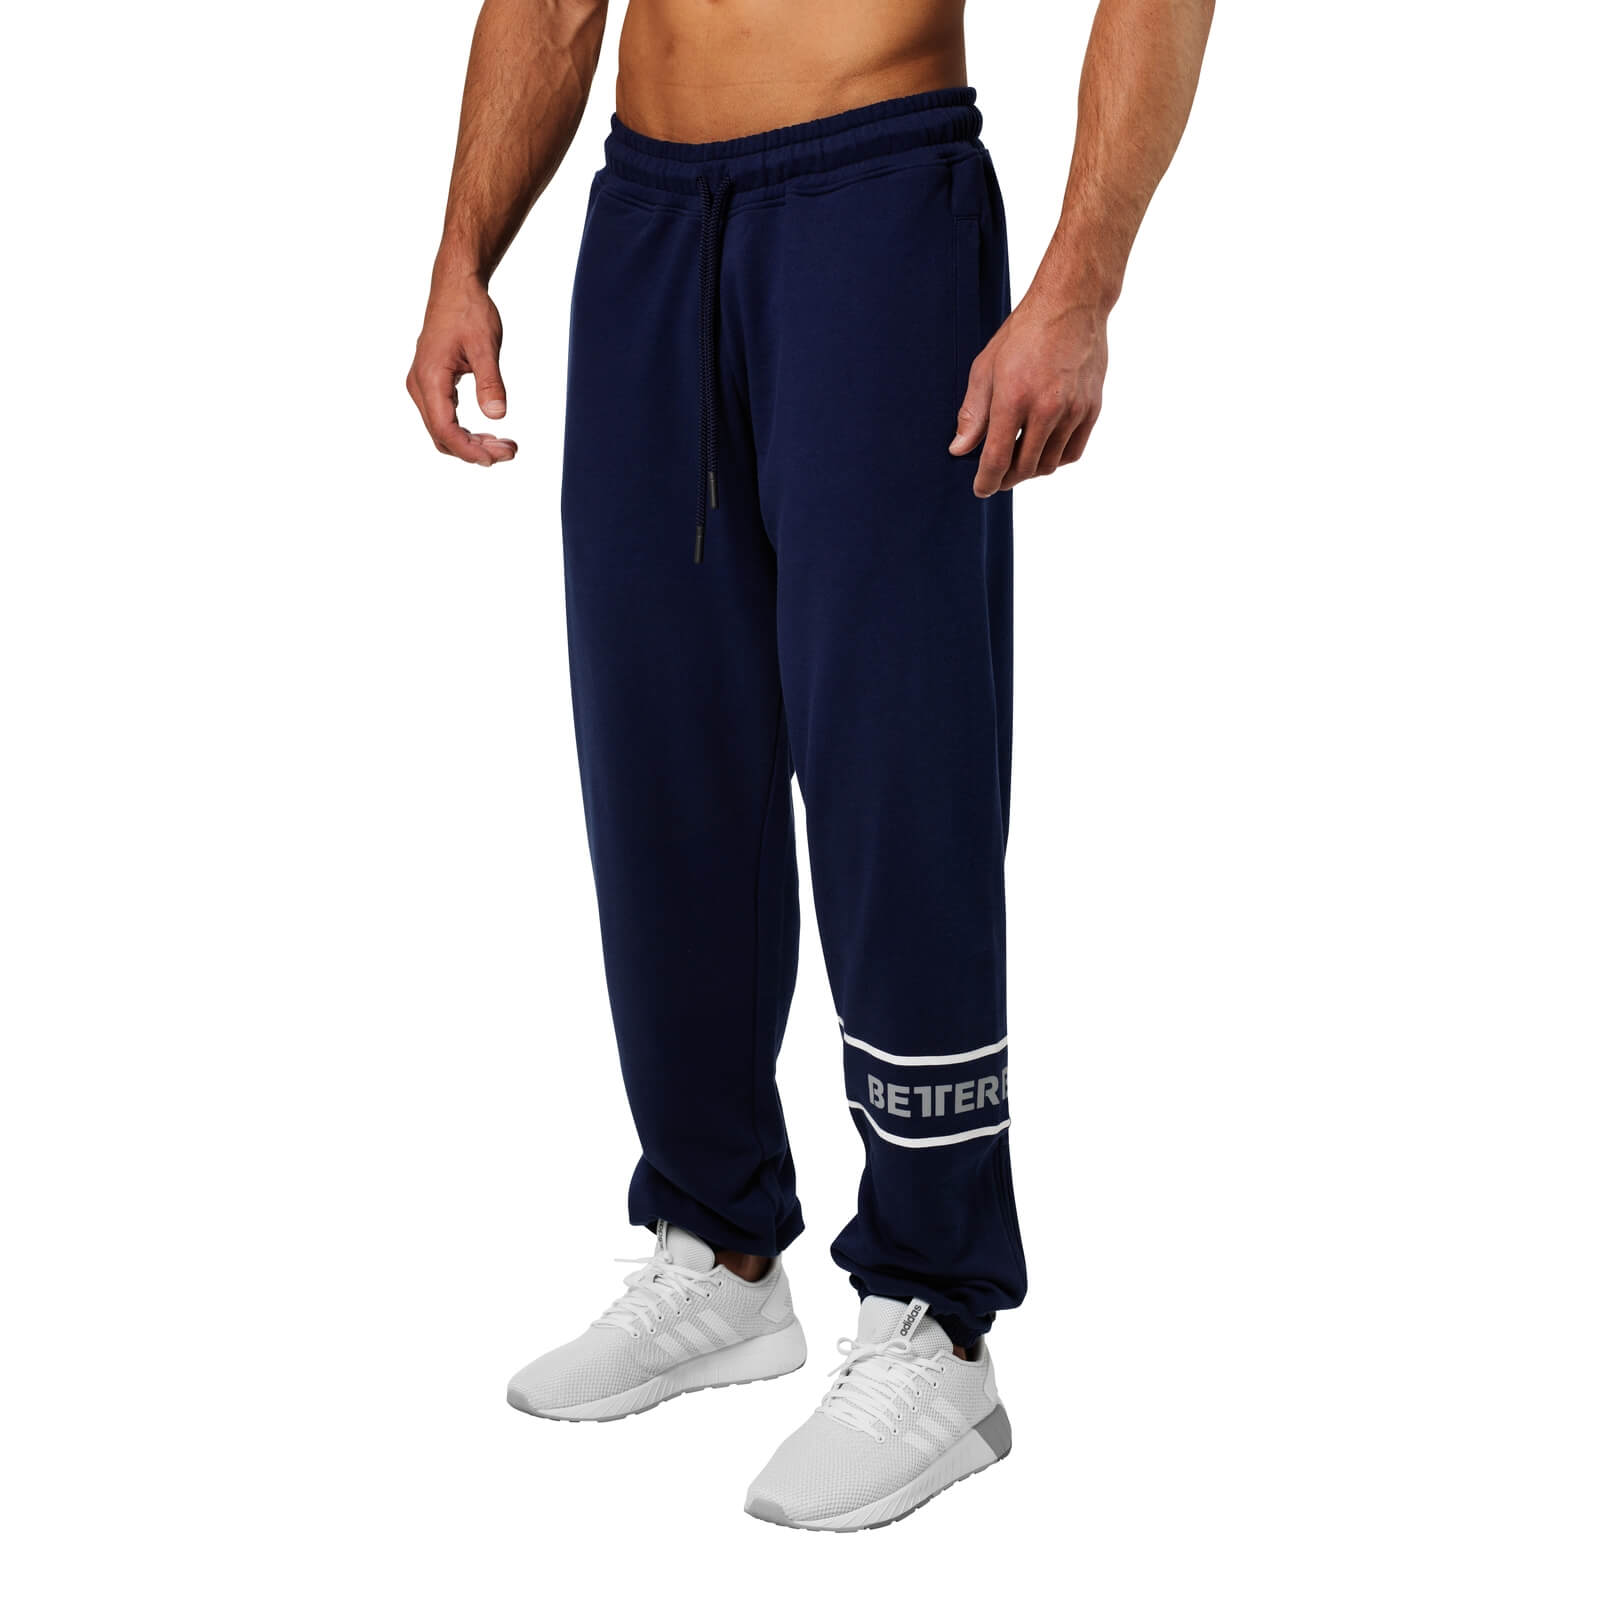 Sjekke Tribeca Sweat Pants, dark navy, Better Bodies hos SportGymButikken.no